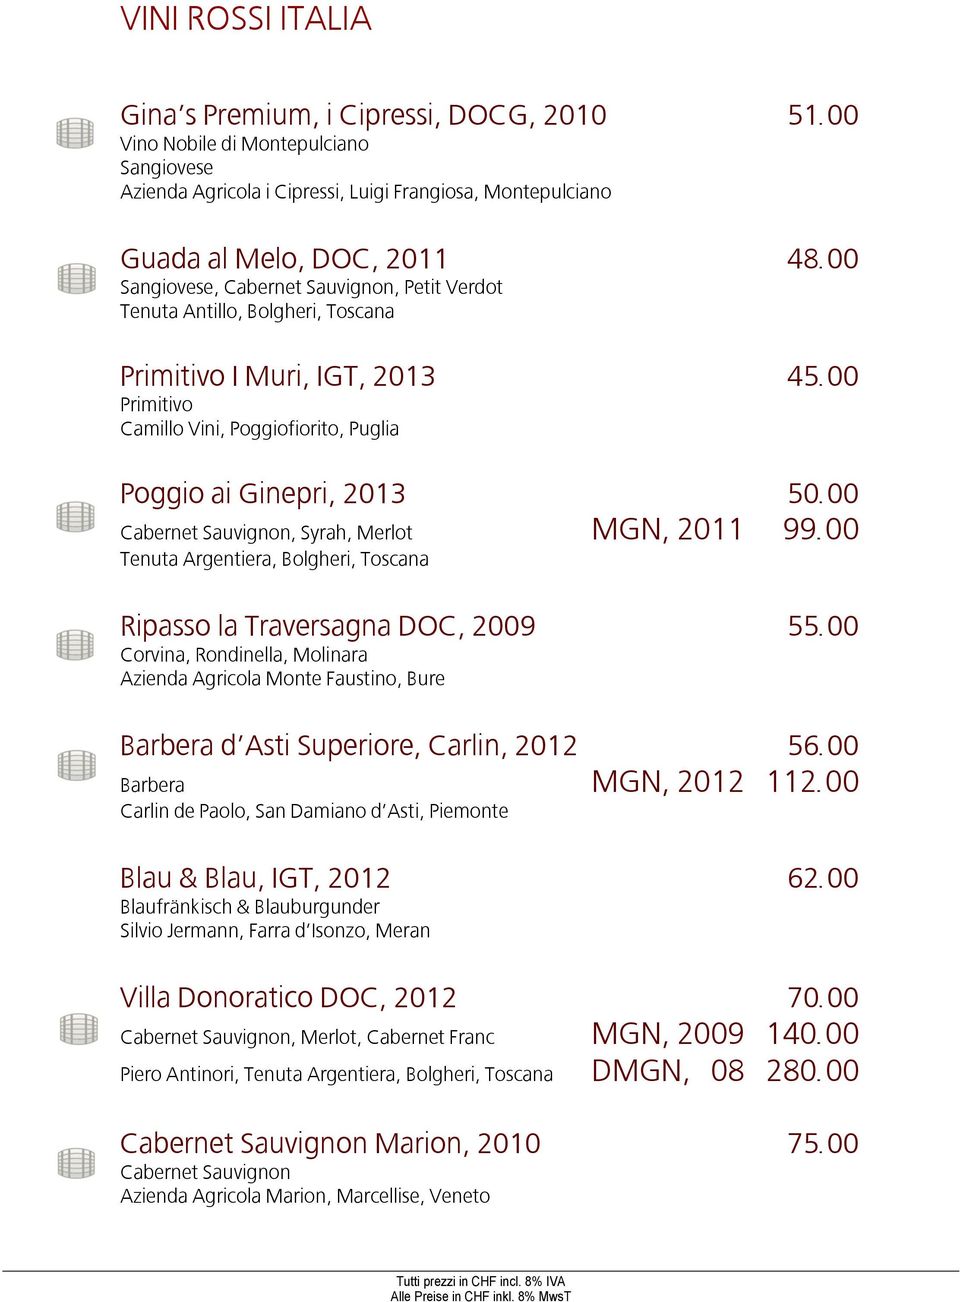 00 Cabernet Sauvignon, Syrah, MGN, 2011 99.00 Tenuta Argentiera, Bolgheri, Toscana Ripasso la Traversagna DOC, 2009 55.